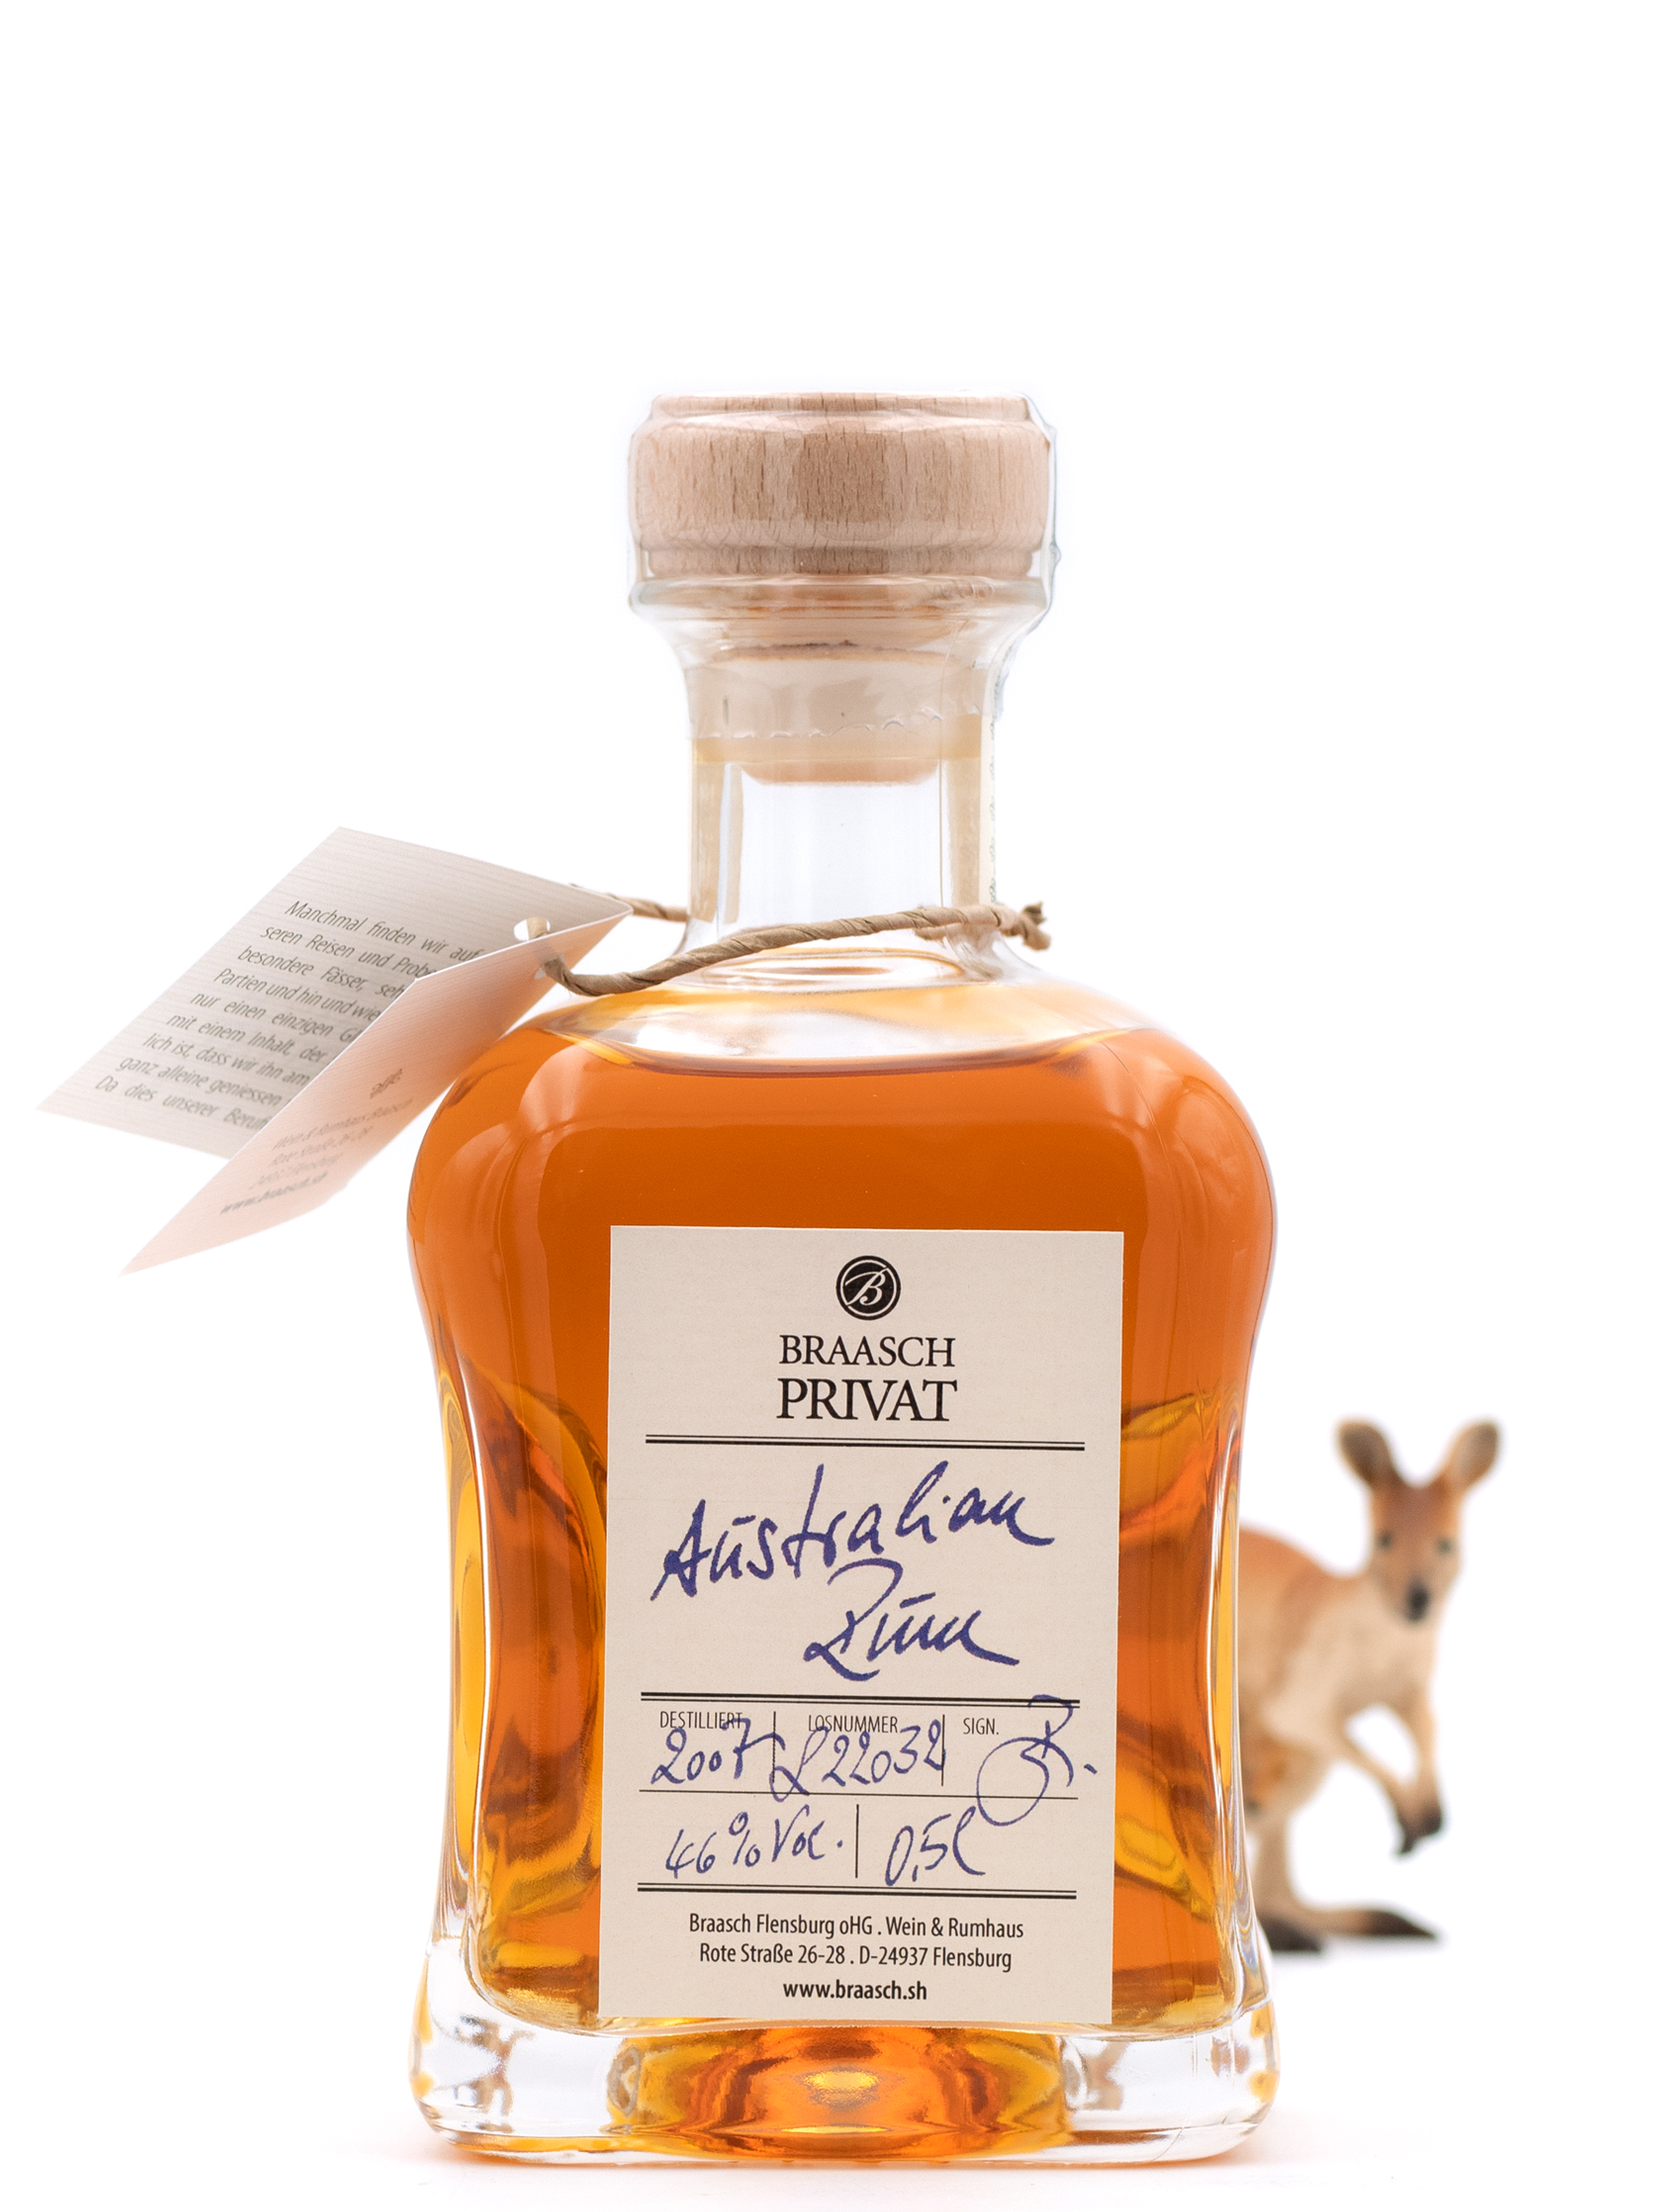 Braasch Privat: Australian Rum (2007) · 0,5L